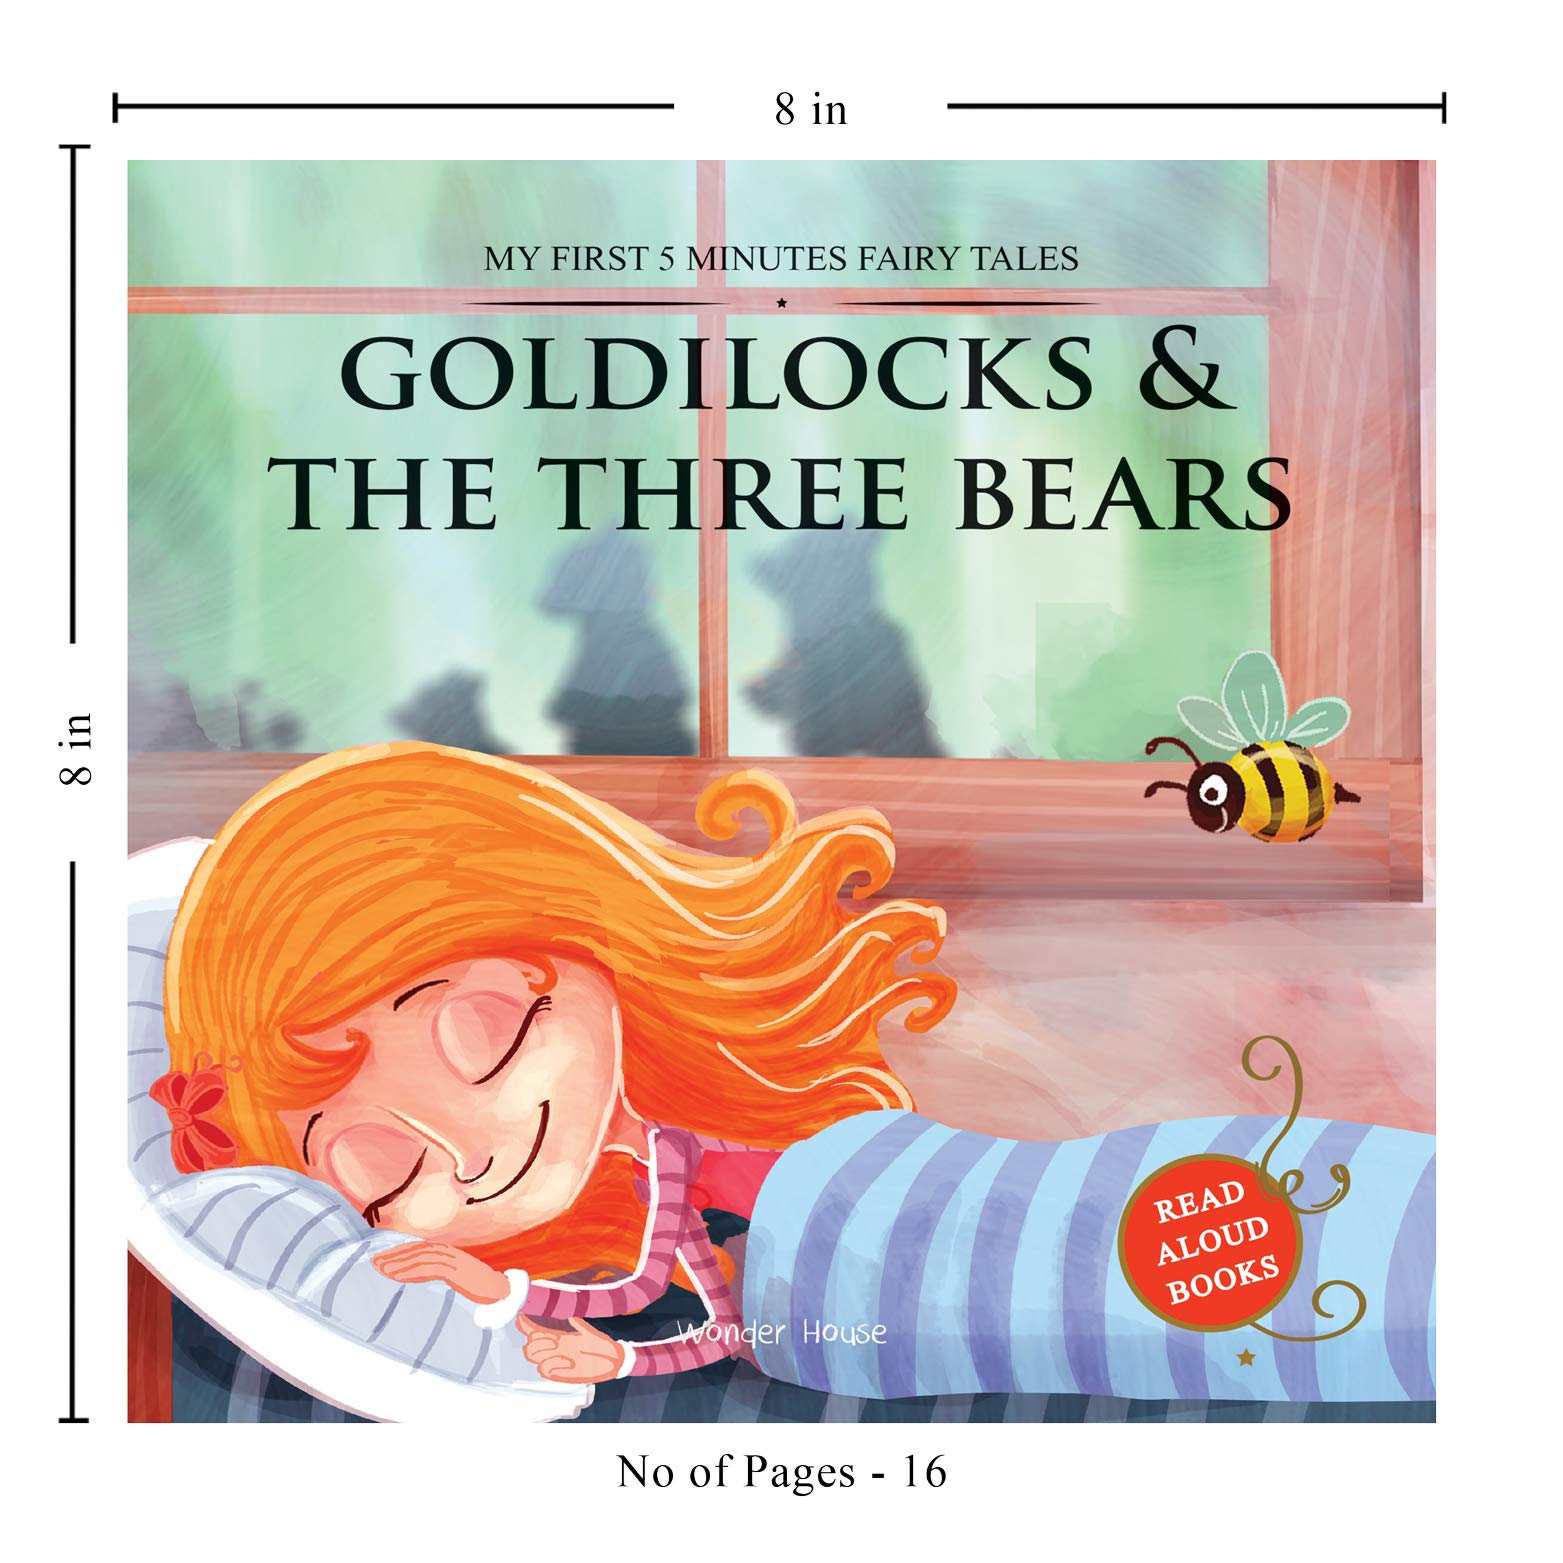 My First 5 Minutes Fairy Tales: Goldilocks & the Three Bears